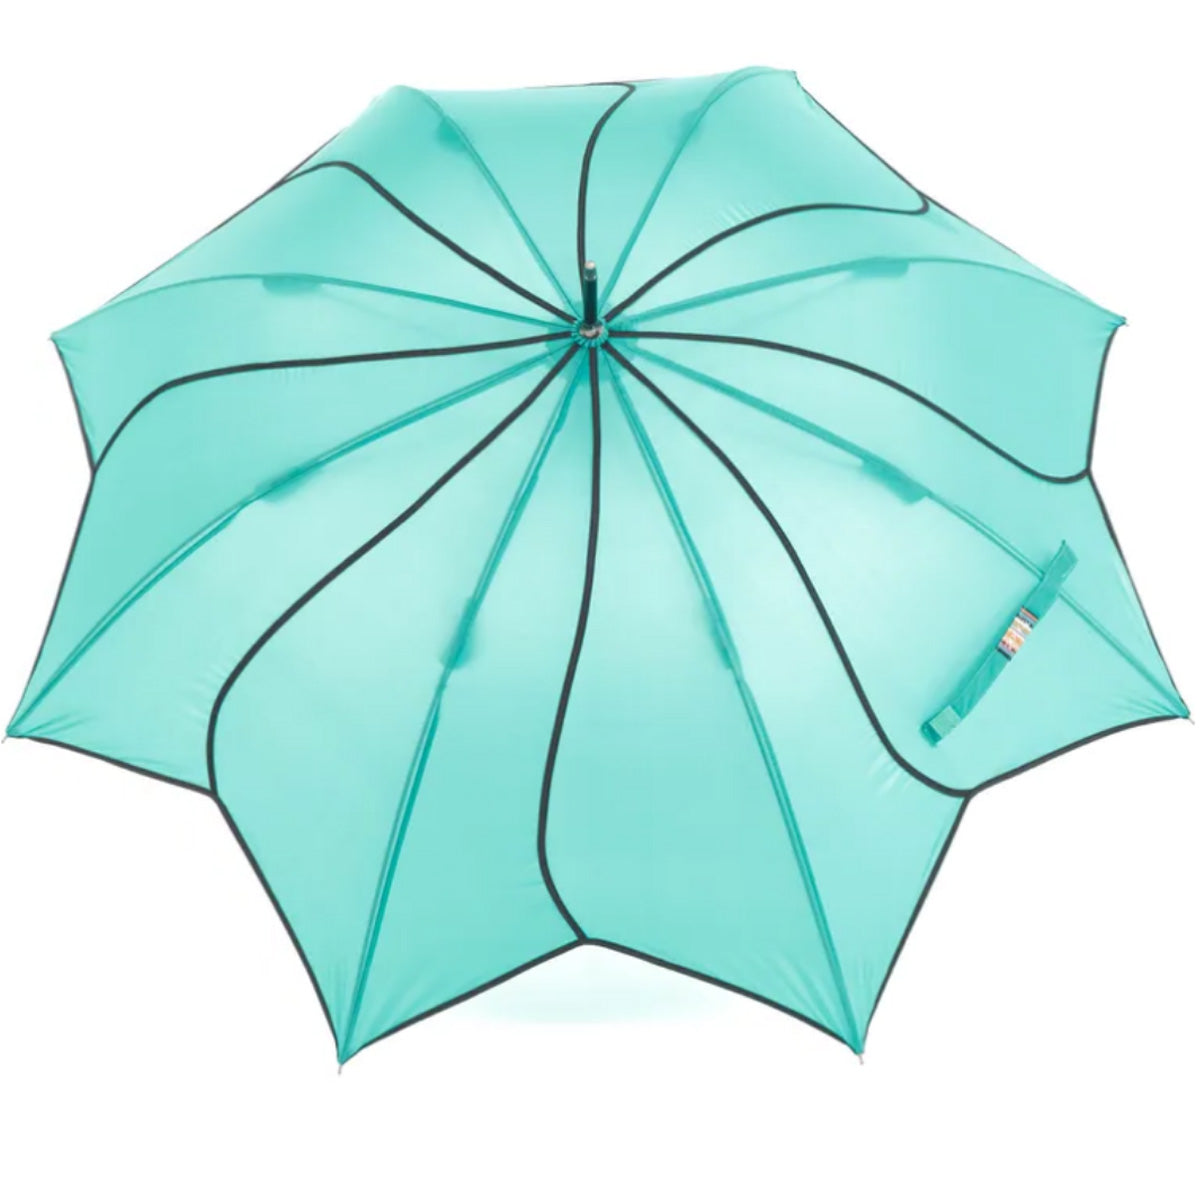 Teal Swirl Umbrella